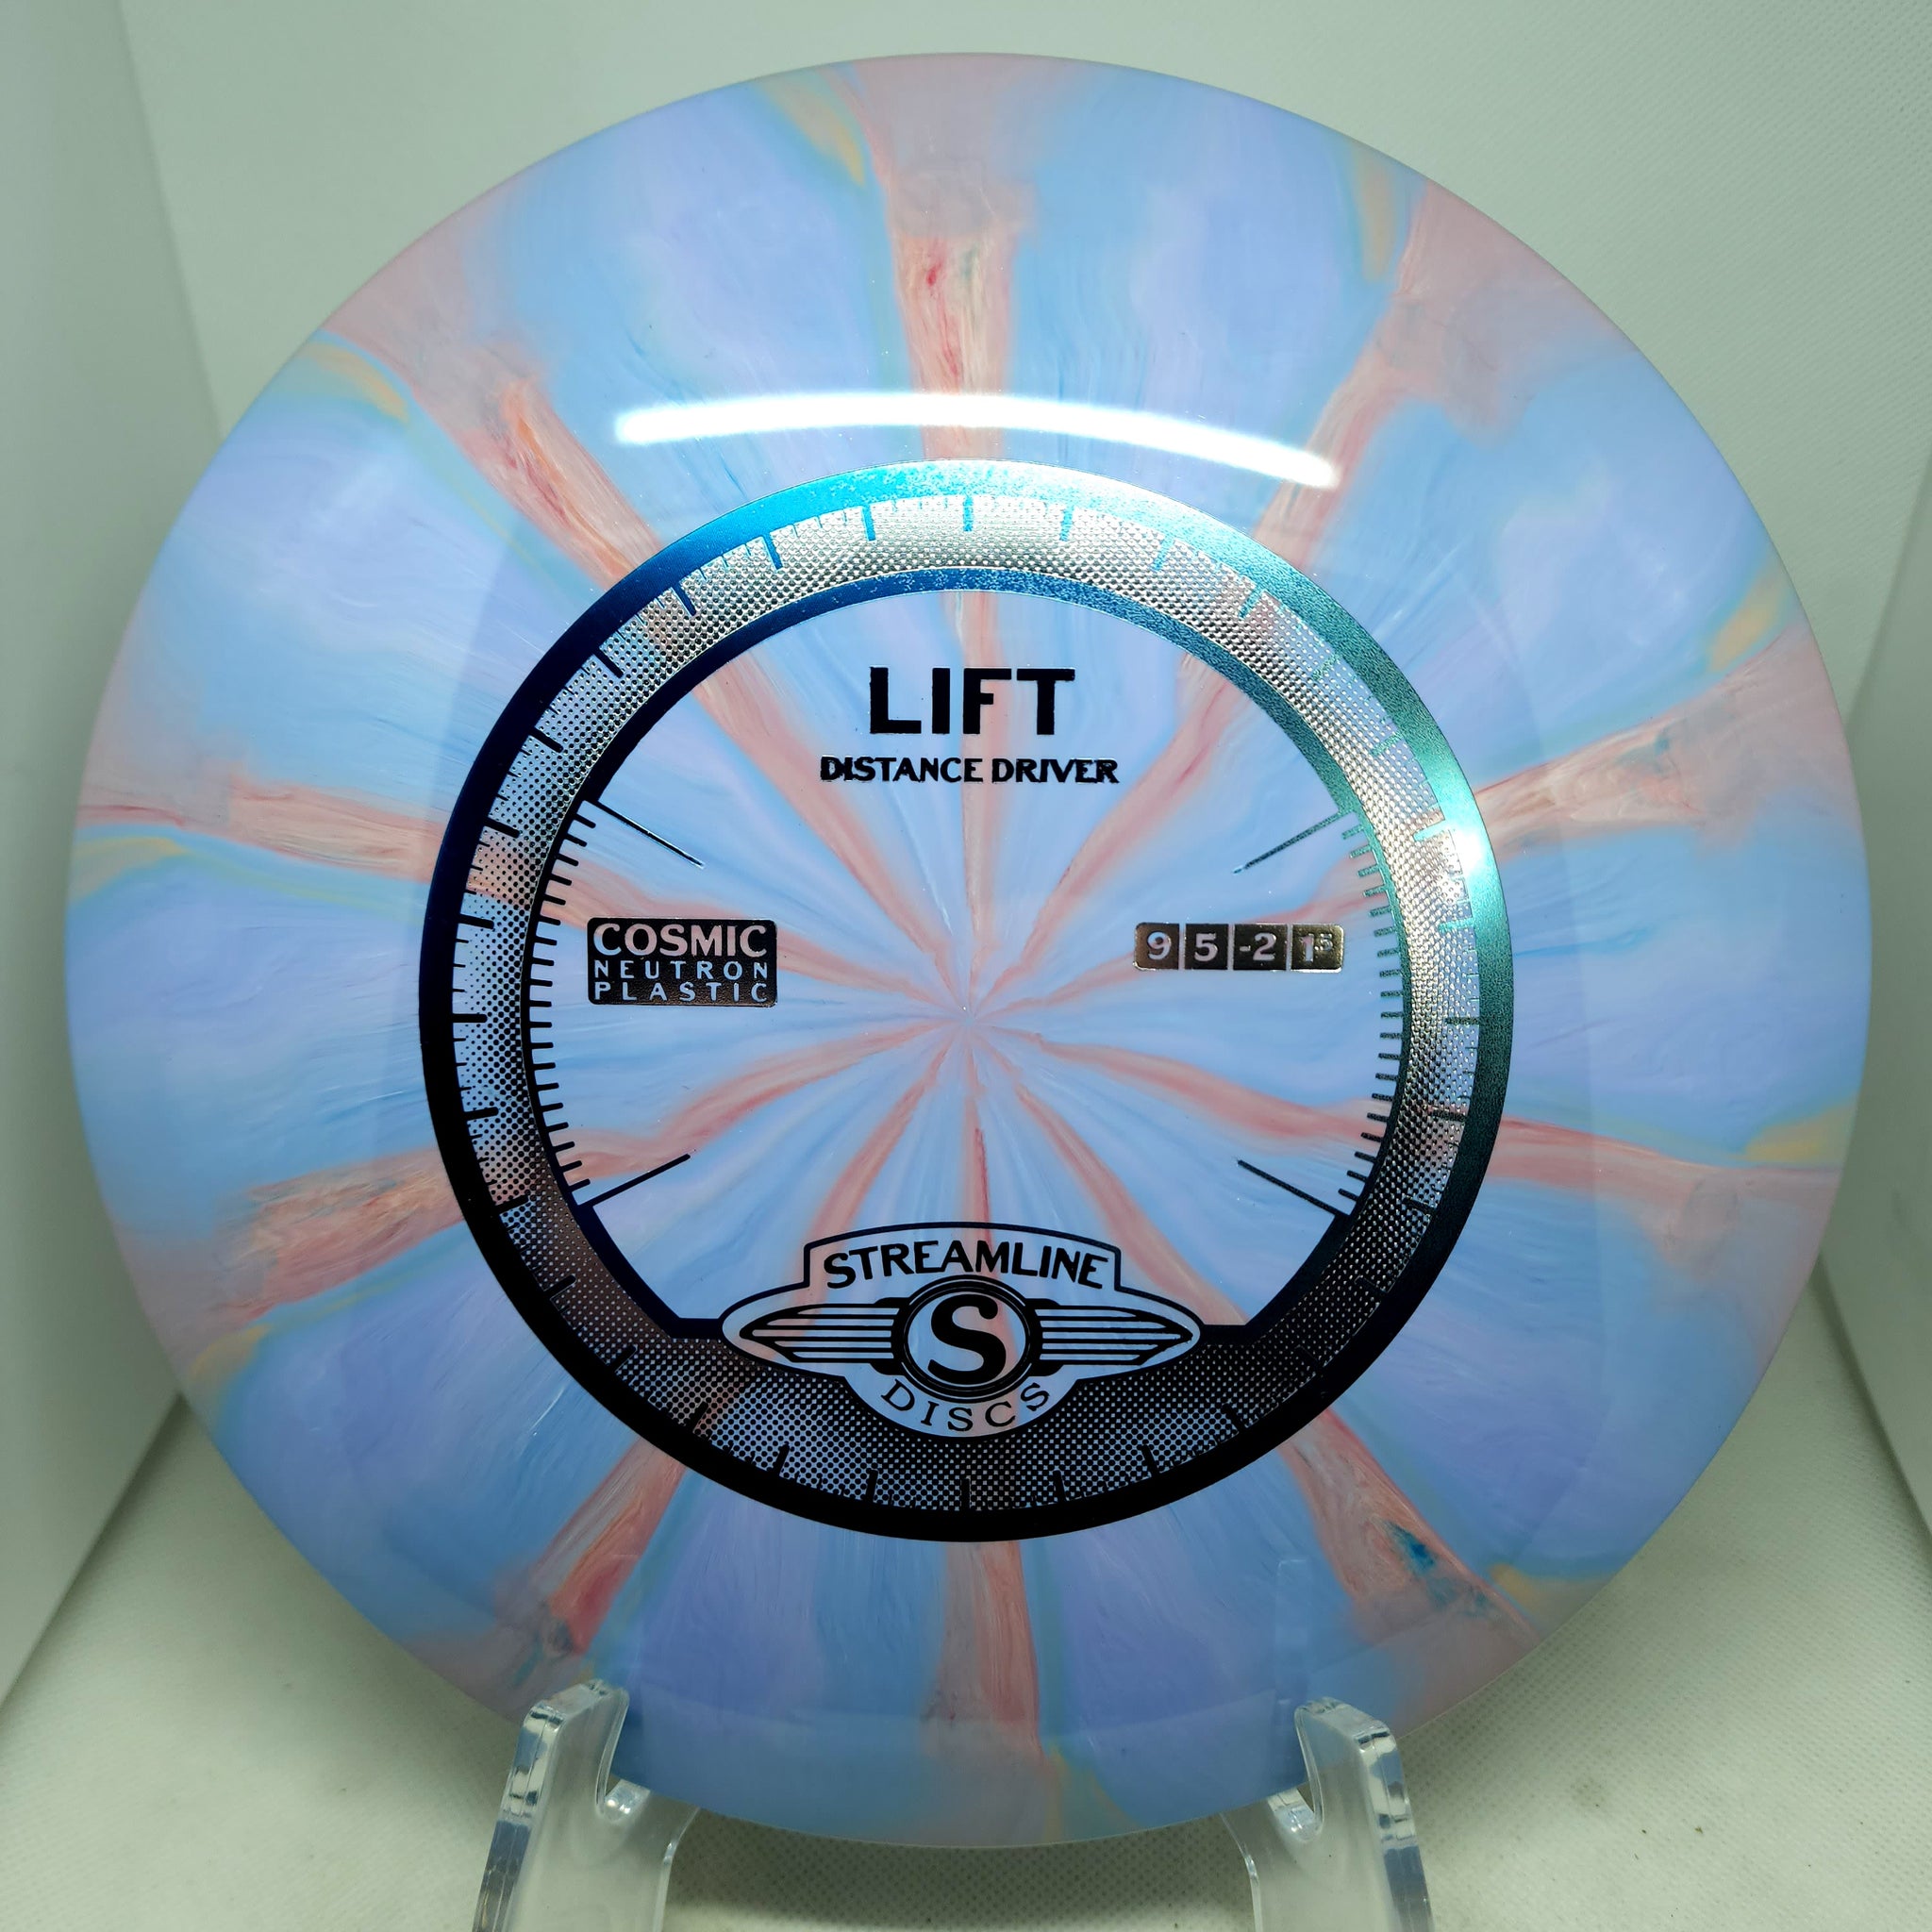 Lift (Cosmic Neutron Plastic)